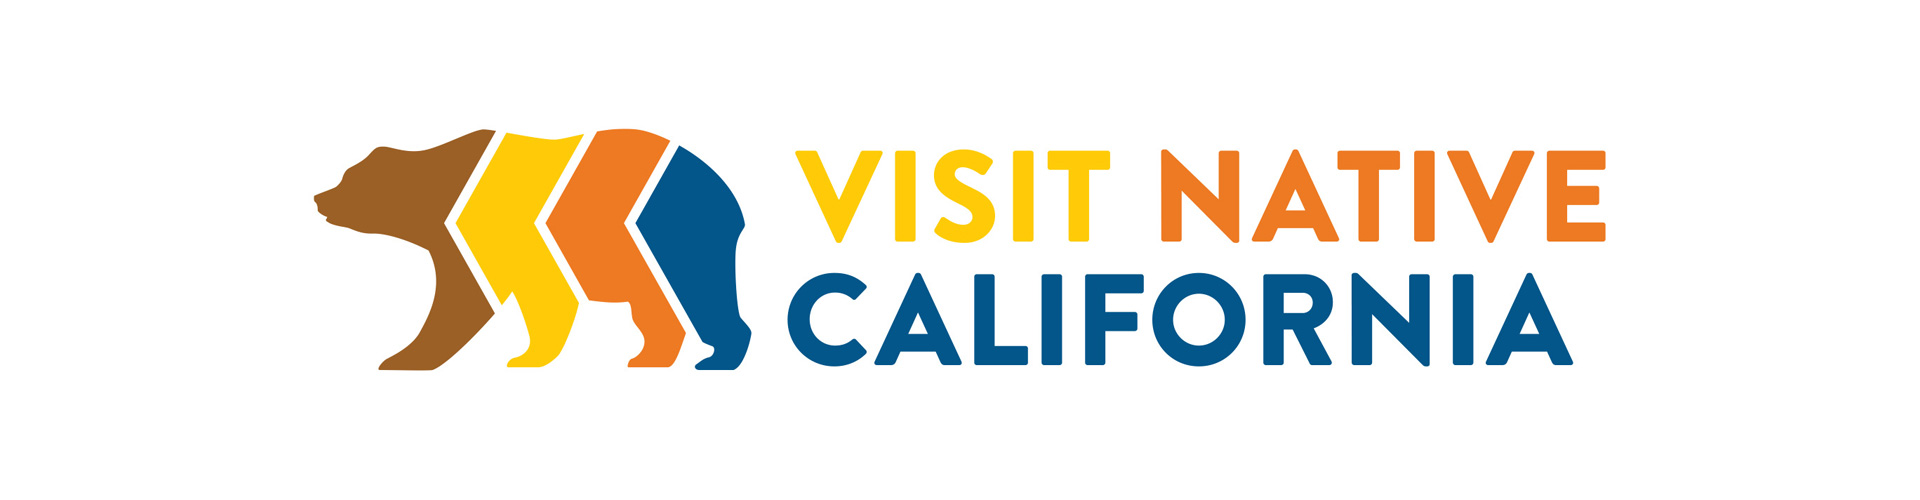 visit california native